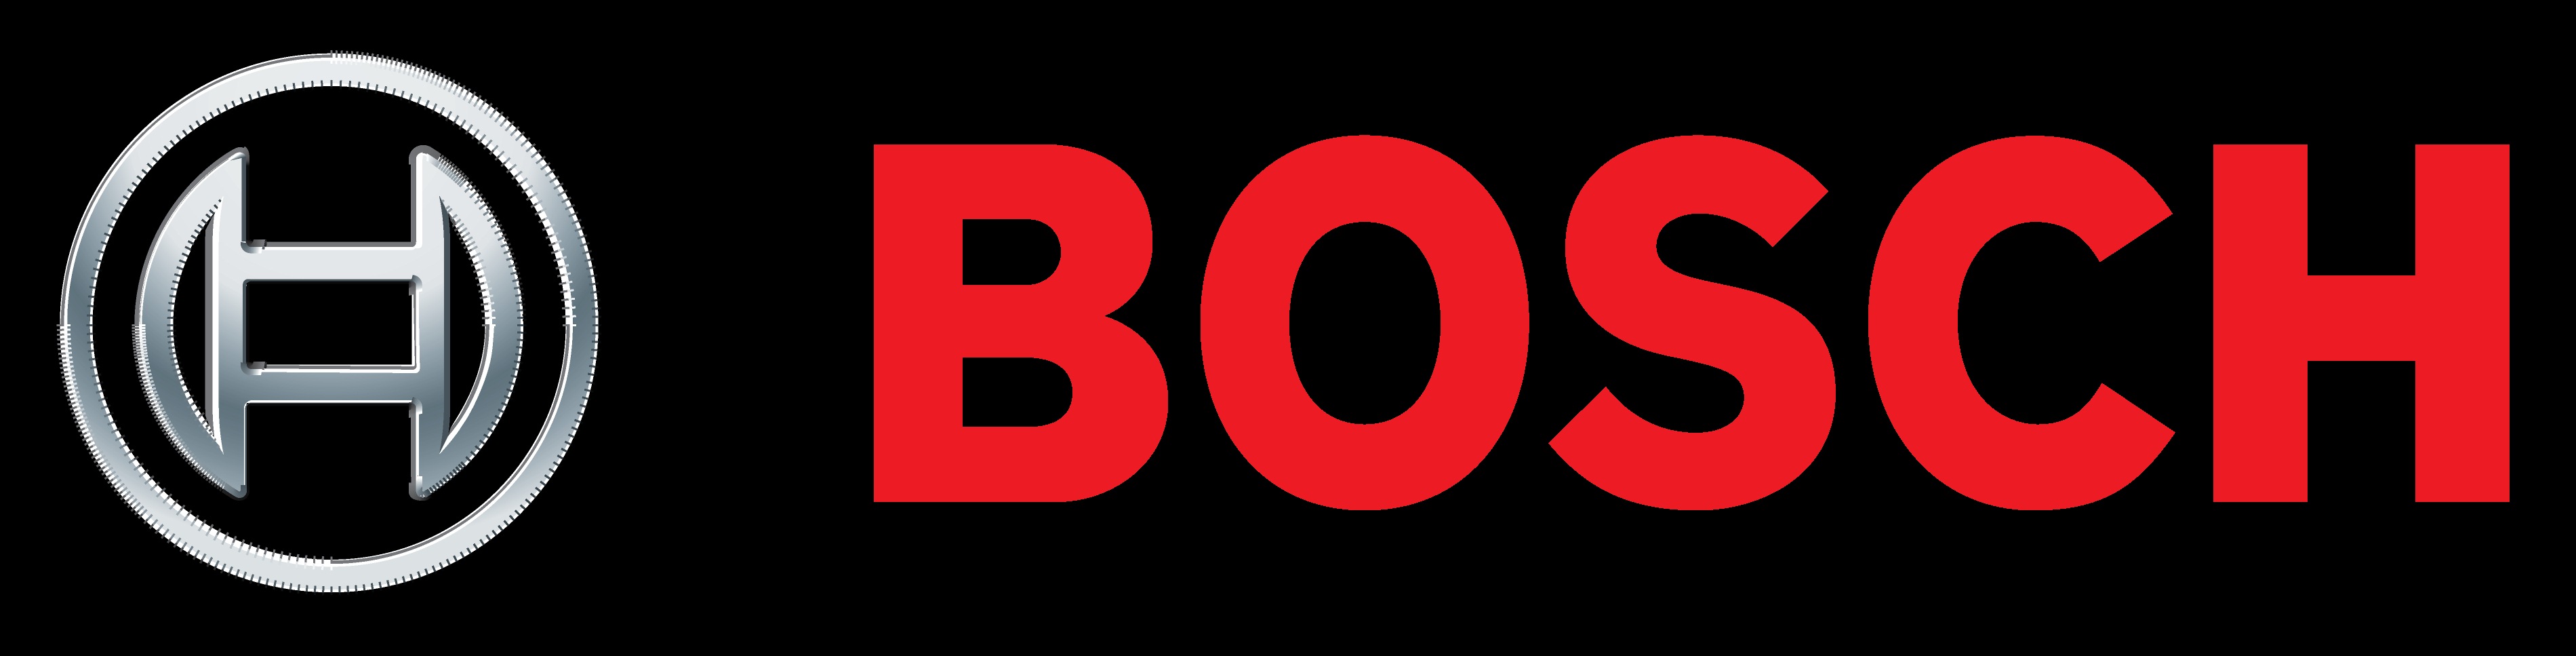 Bosch Symbol - Bosch, Transparent background PNG HD thumbnail